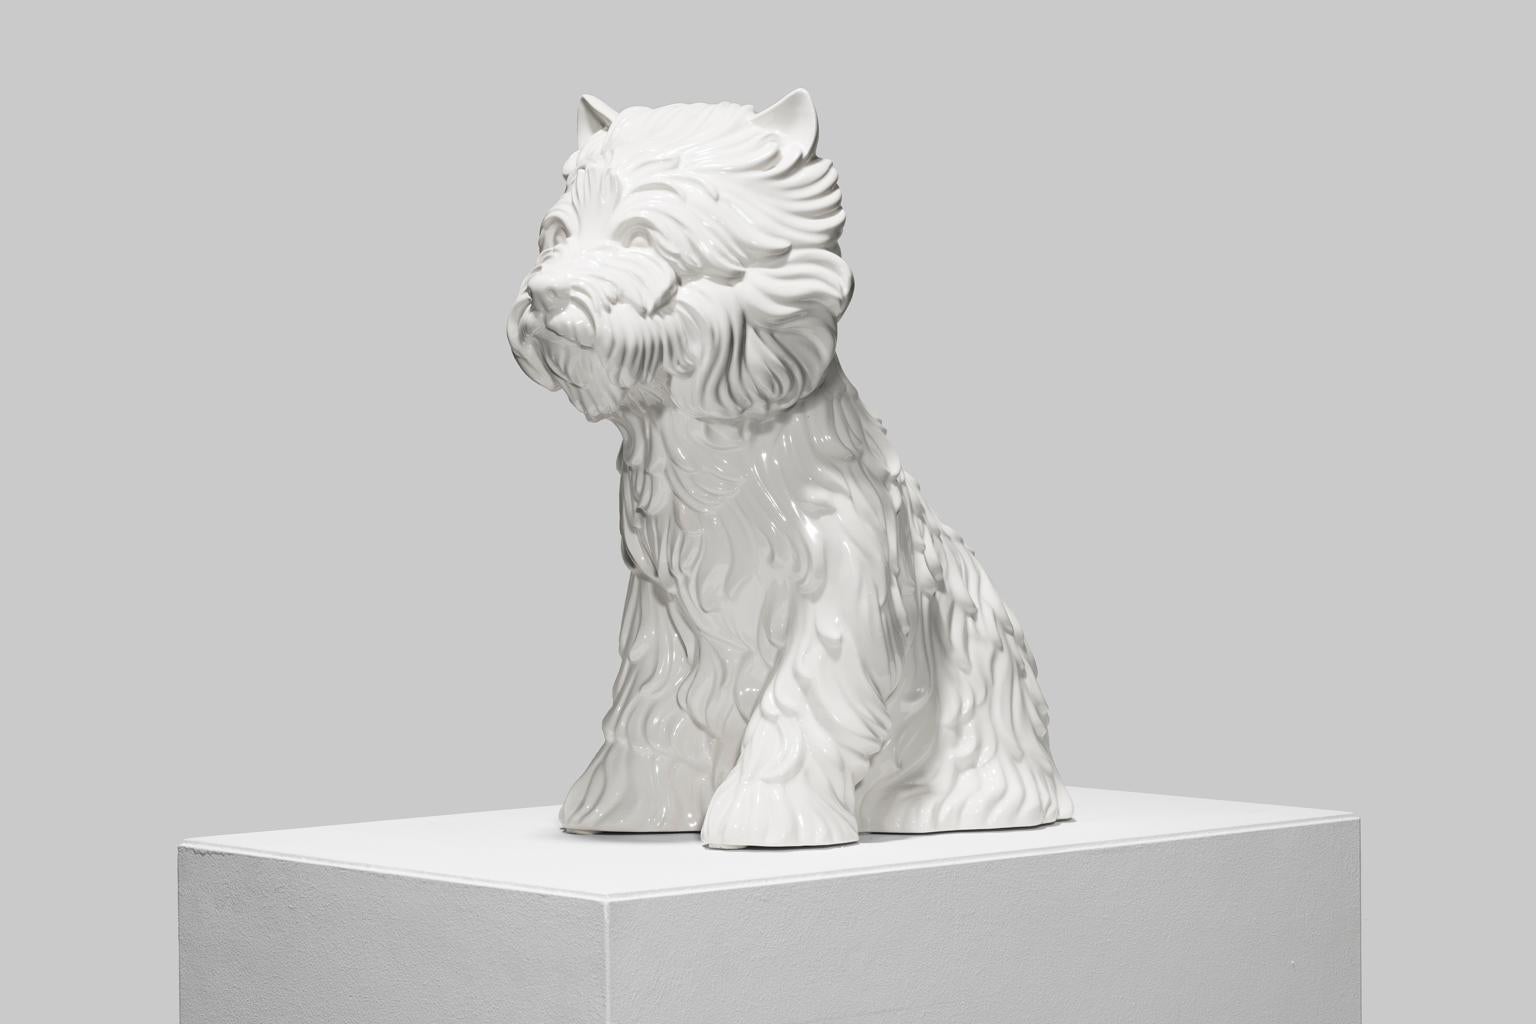 Jeff Koons Figurative Sculpture - "Puppy", White Glazed Porcelain Vase With Original Box, Edition of 3000